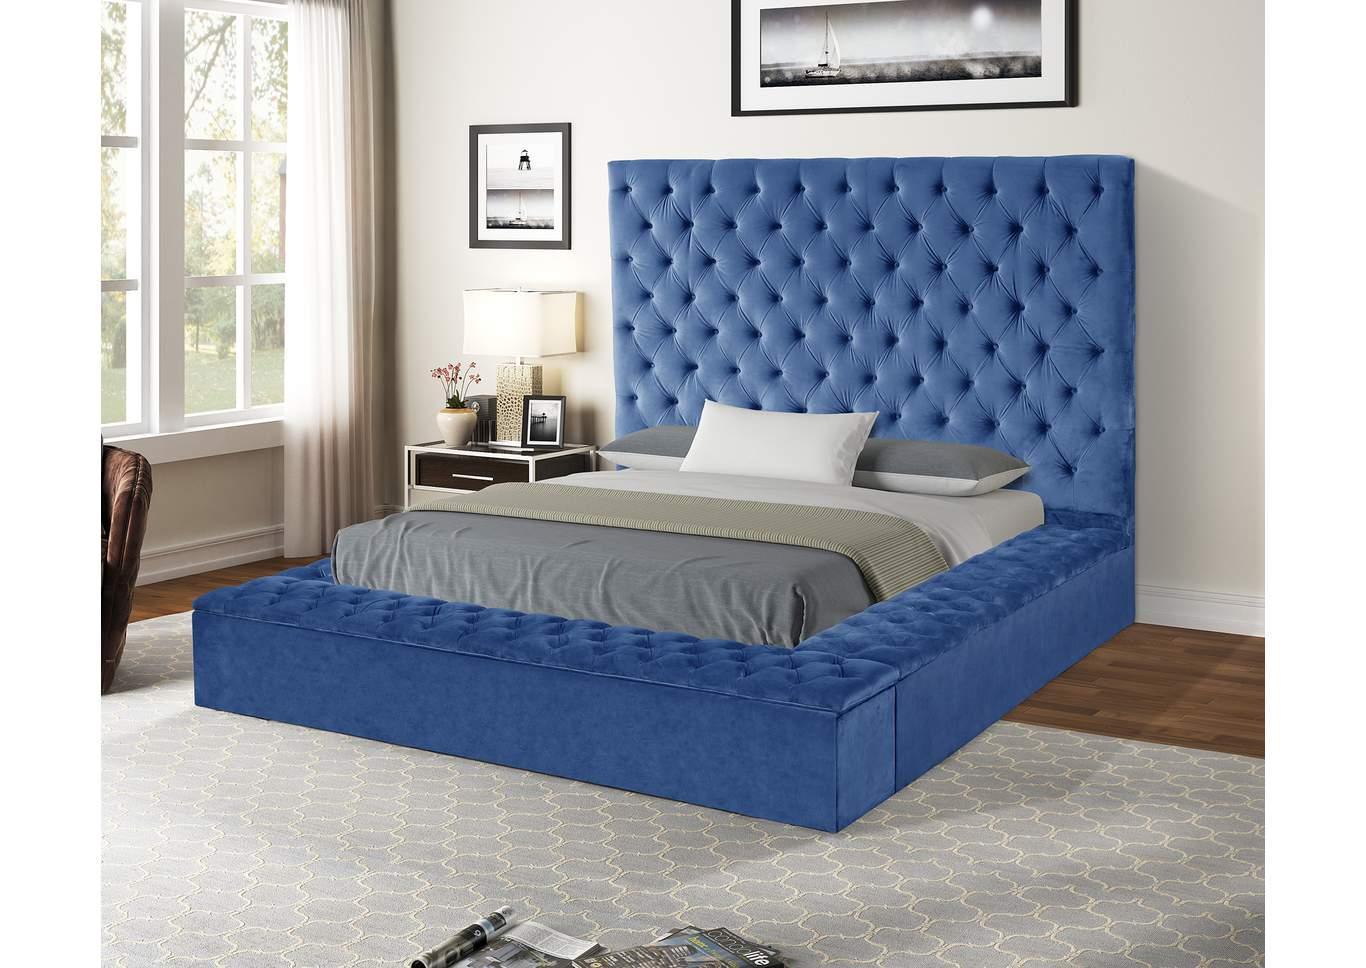 Contemporary, Modern Storage Bed NORA GHF-808857724274 in Navy blue Velvet